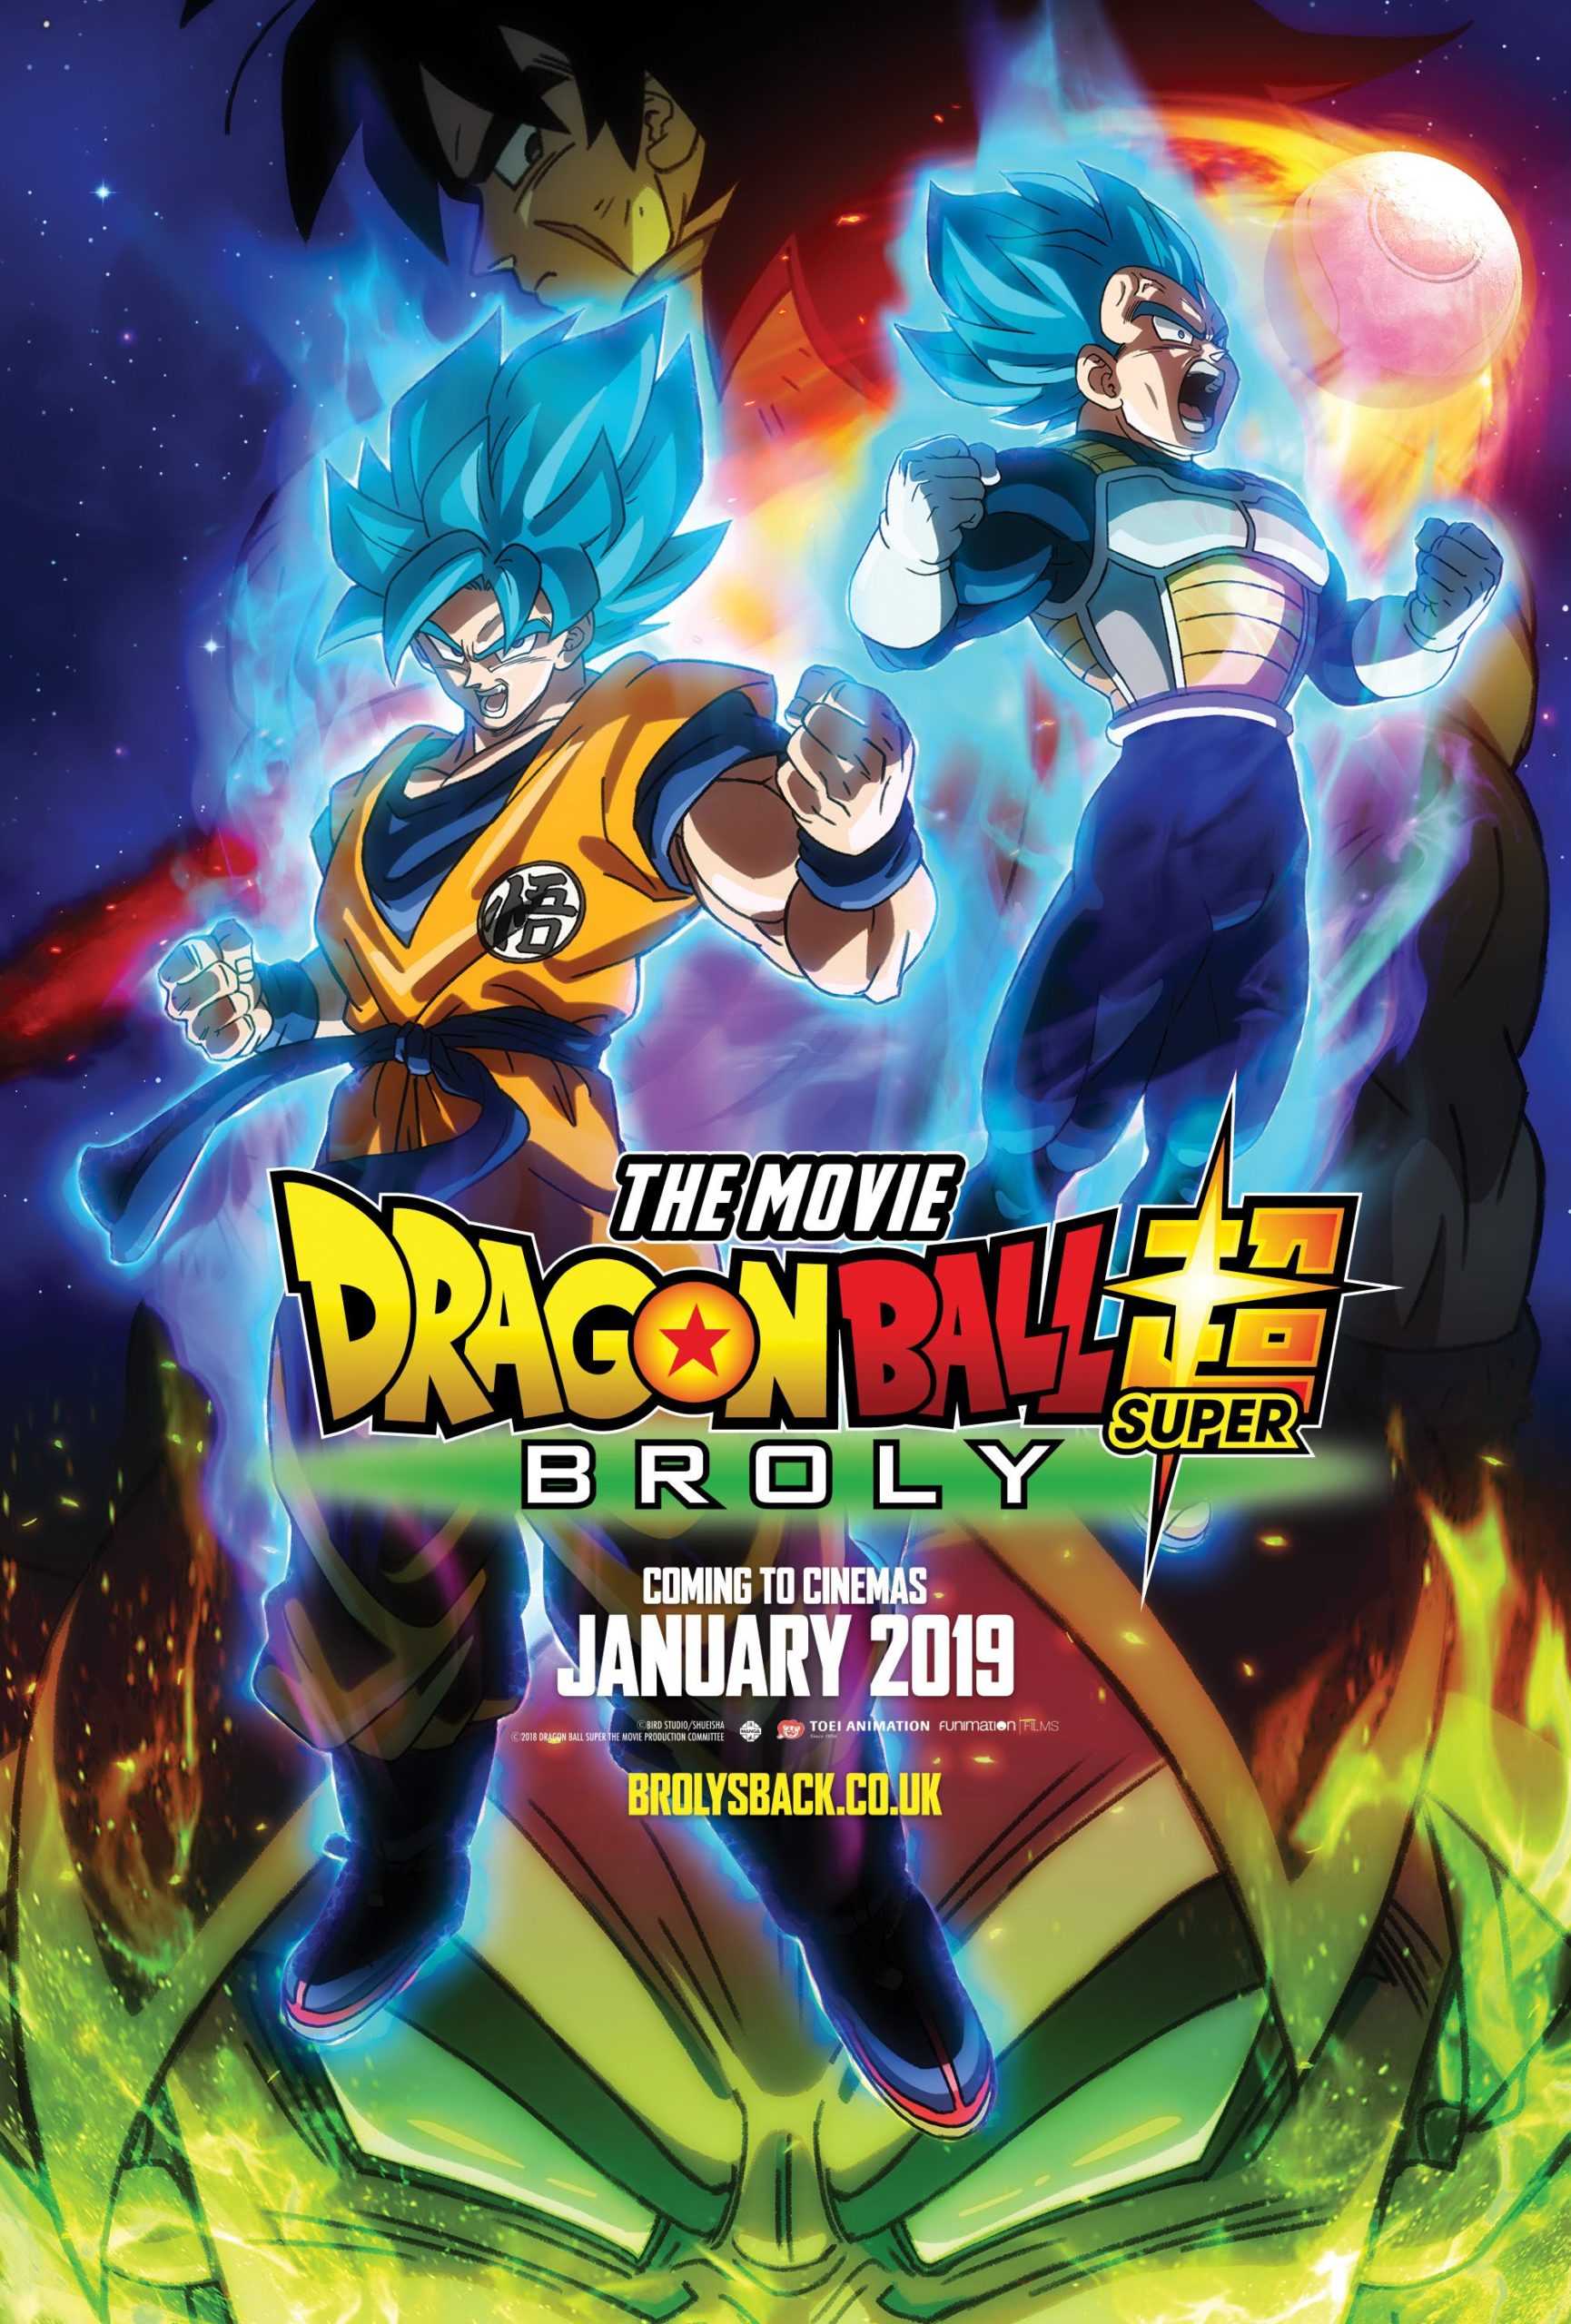 Dragon Ball Super: SUPERHERO Steelbook (UK) - Blu-ray Forum